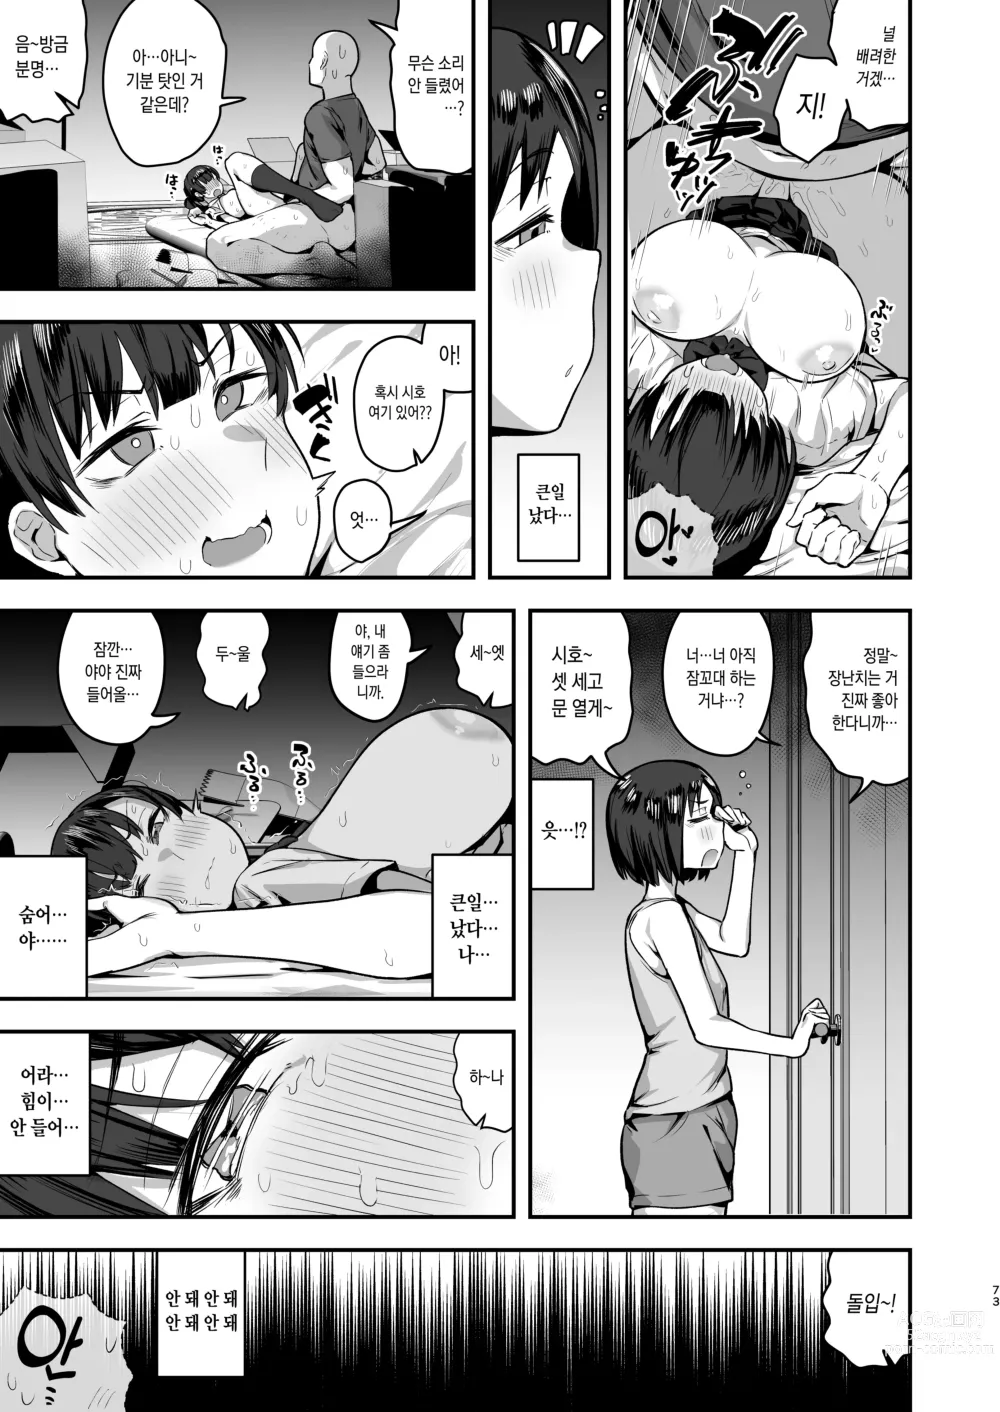 Page 73 of doujinshi 여동생의 친구가 너무 개변태 체취 페티라서, 찐따인 나랑 위험한 날 질싸 섹스 존나 함 (decensored)